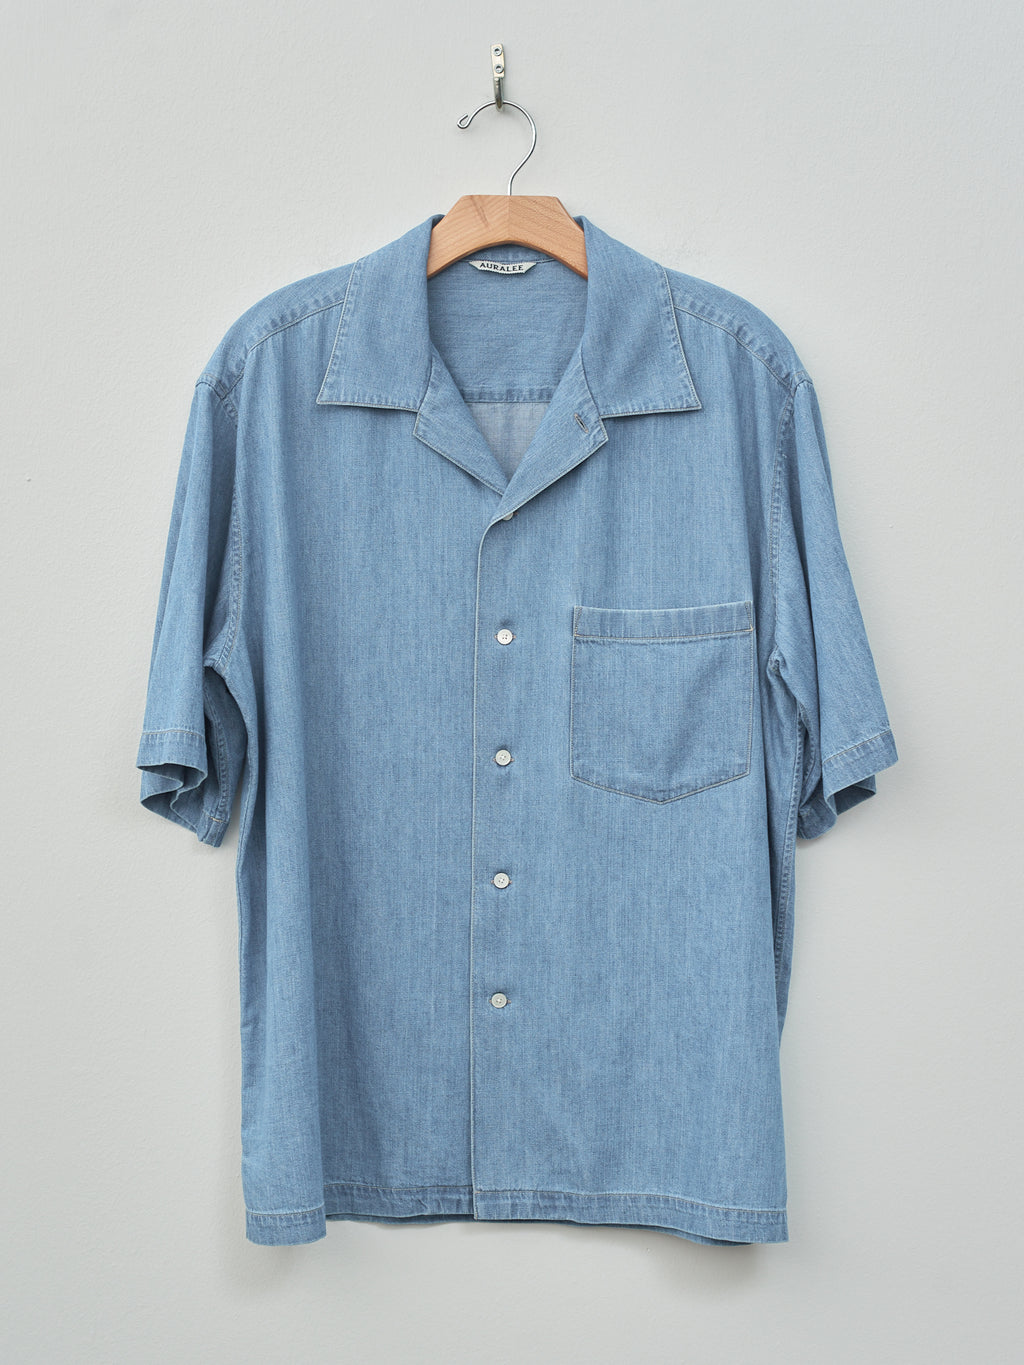 Namu Shop - Auralee Selvedge Super Light Denim Half Sleeved Shirt - Washed Indigo